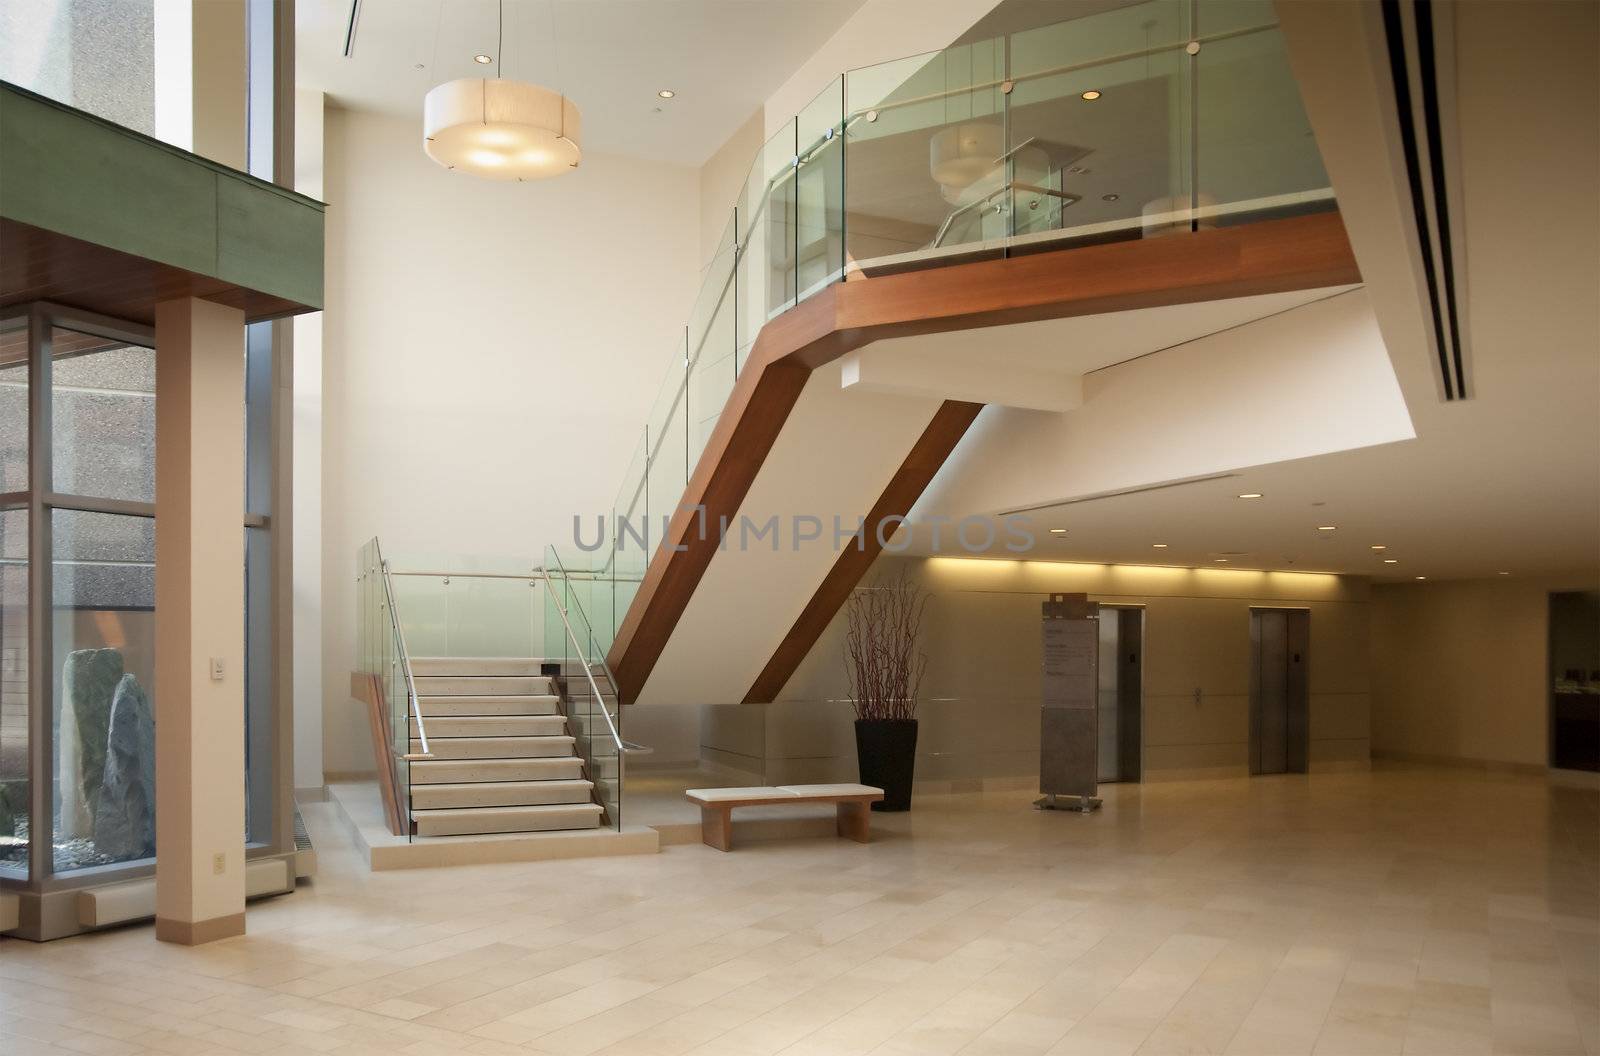 Stairway in modern commercial building